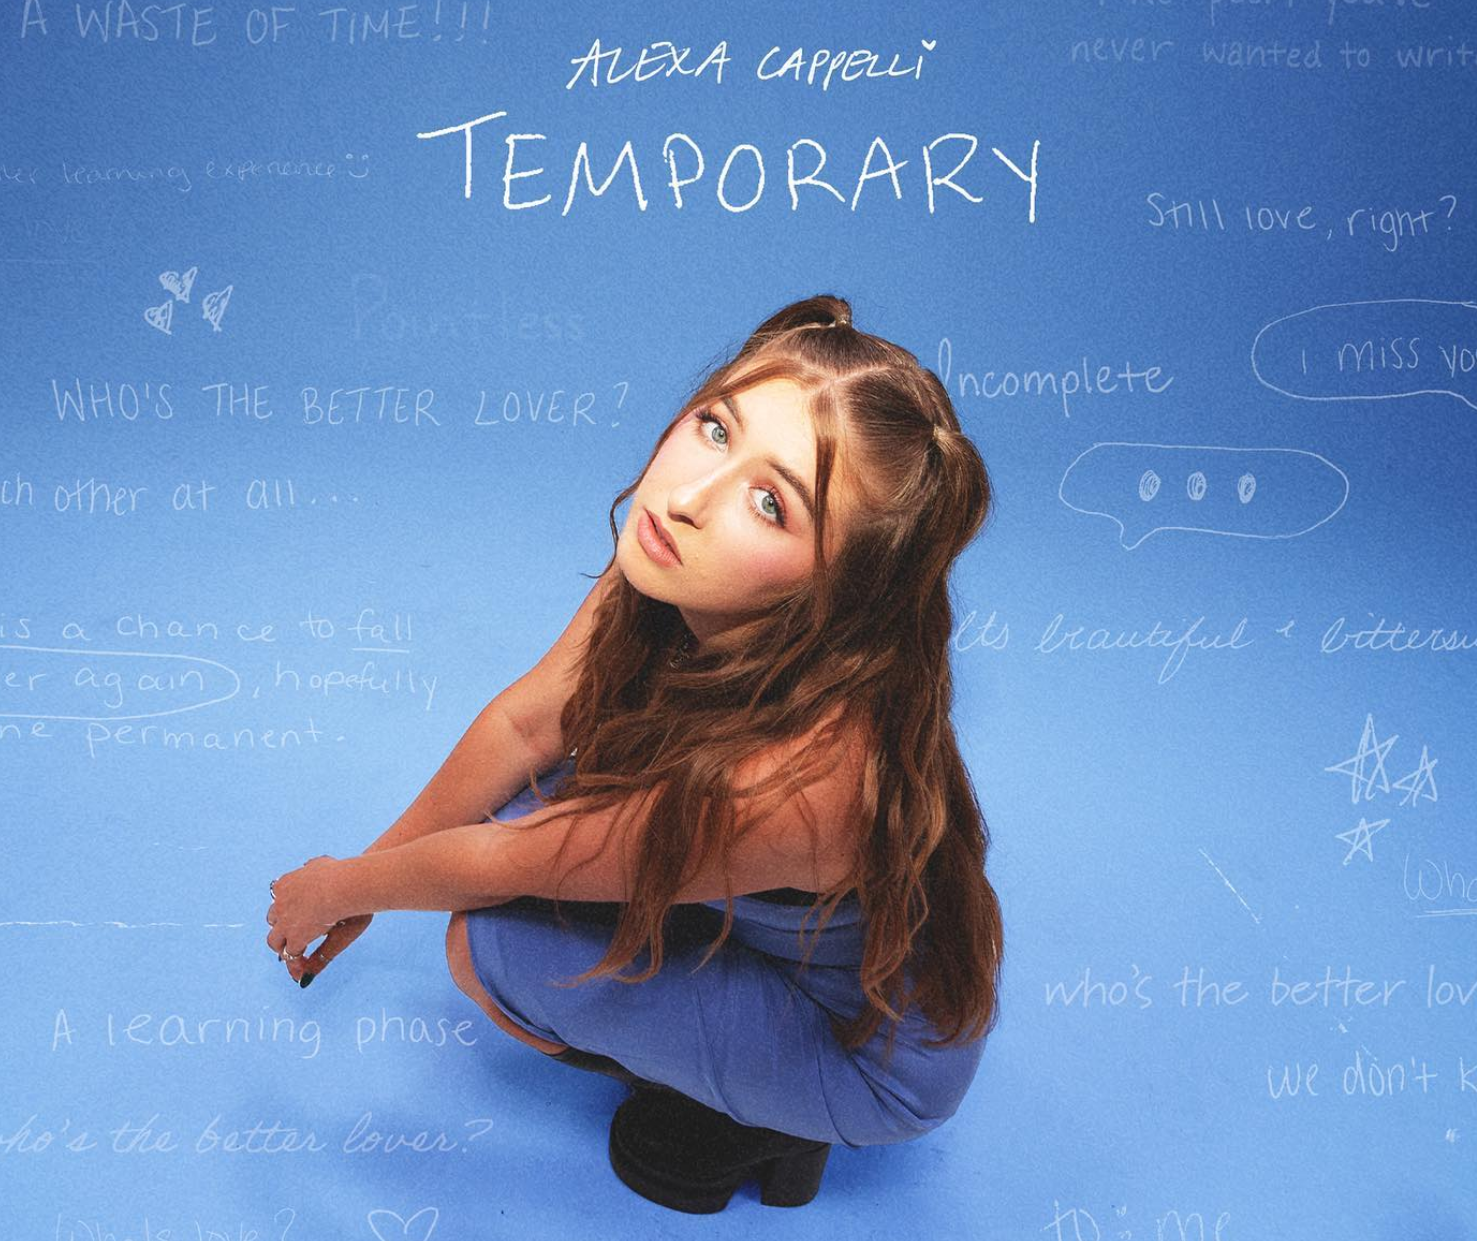 Alexa Cappelli on Her Viral Music Career & New Single, “Temporary”